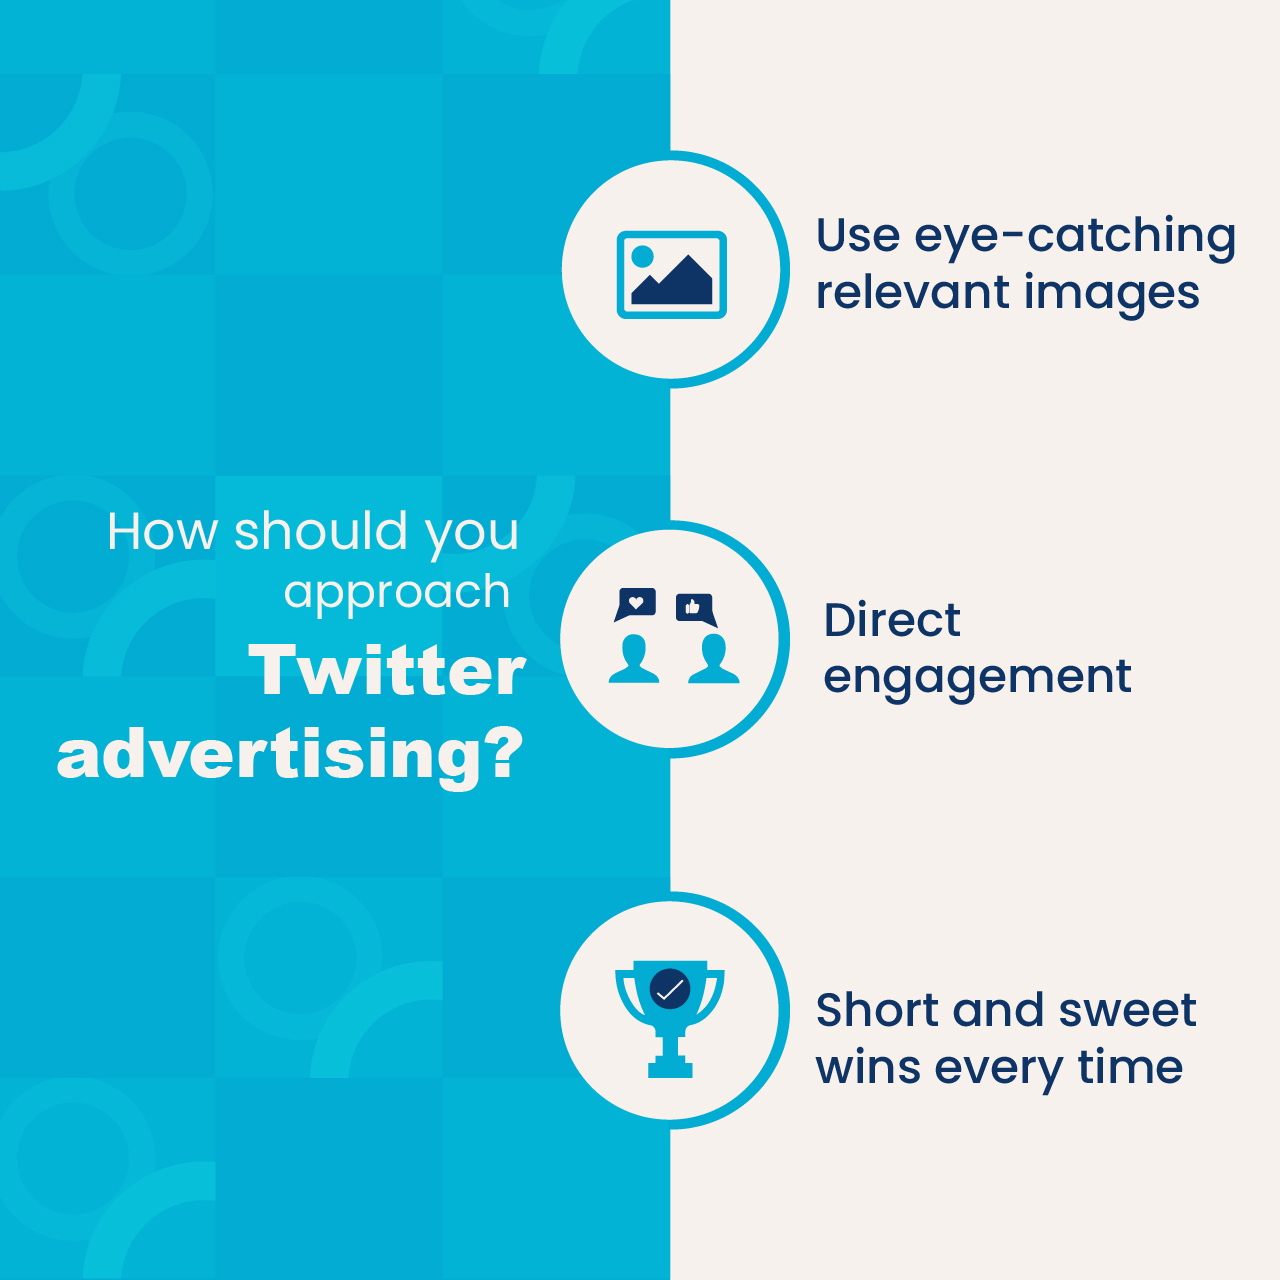 Twitter advertising best practices